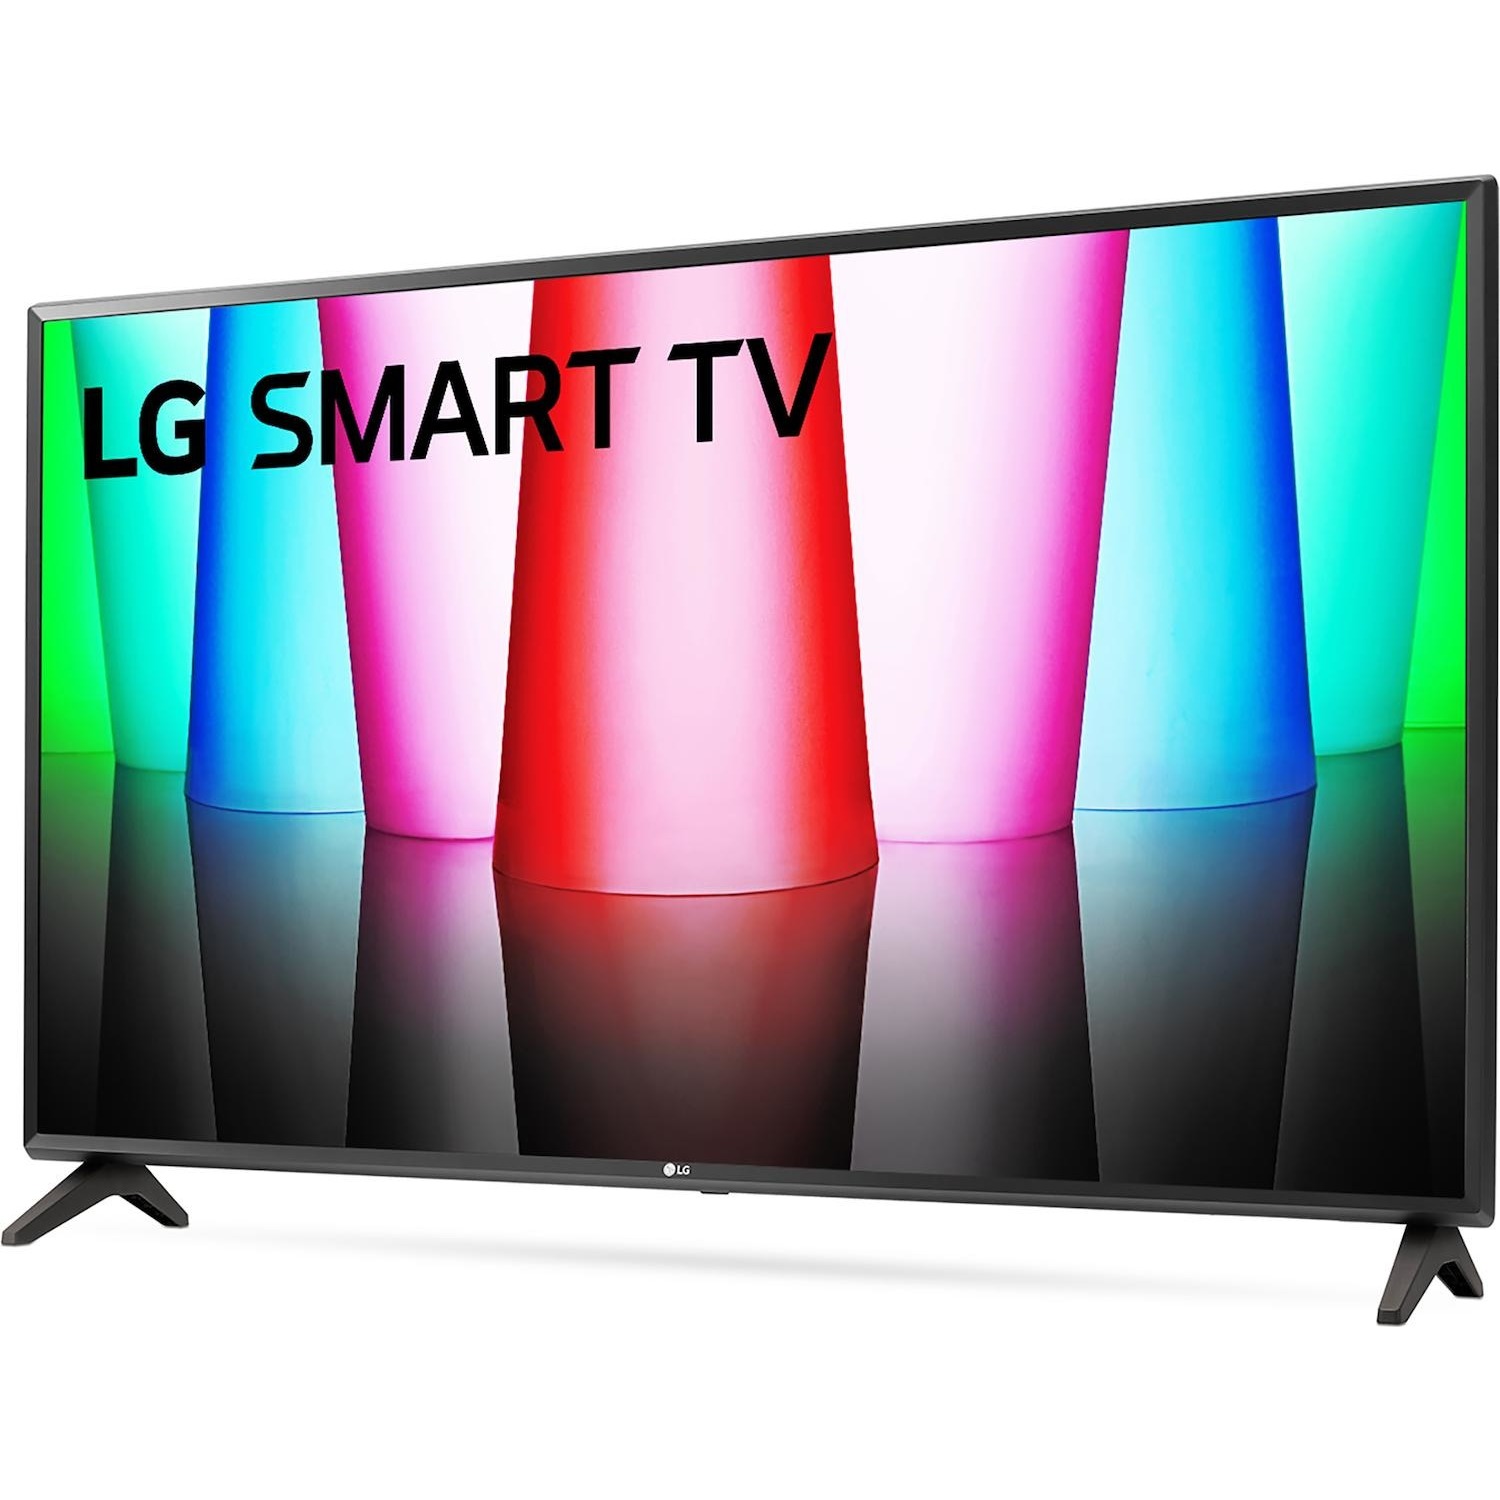 Immagine per TV LED Smart LG 32LQ570B6 da DIMOStore